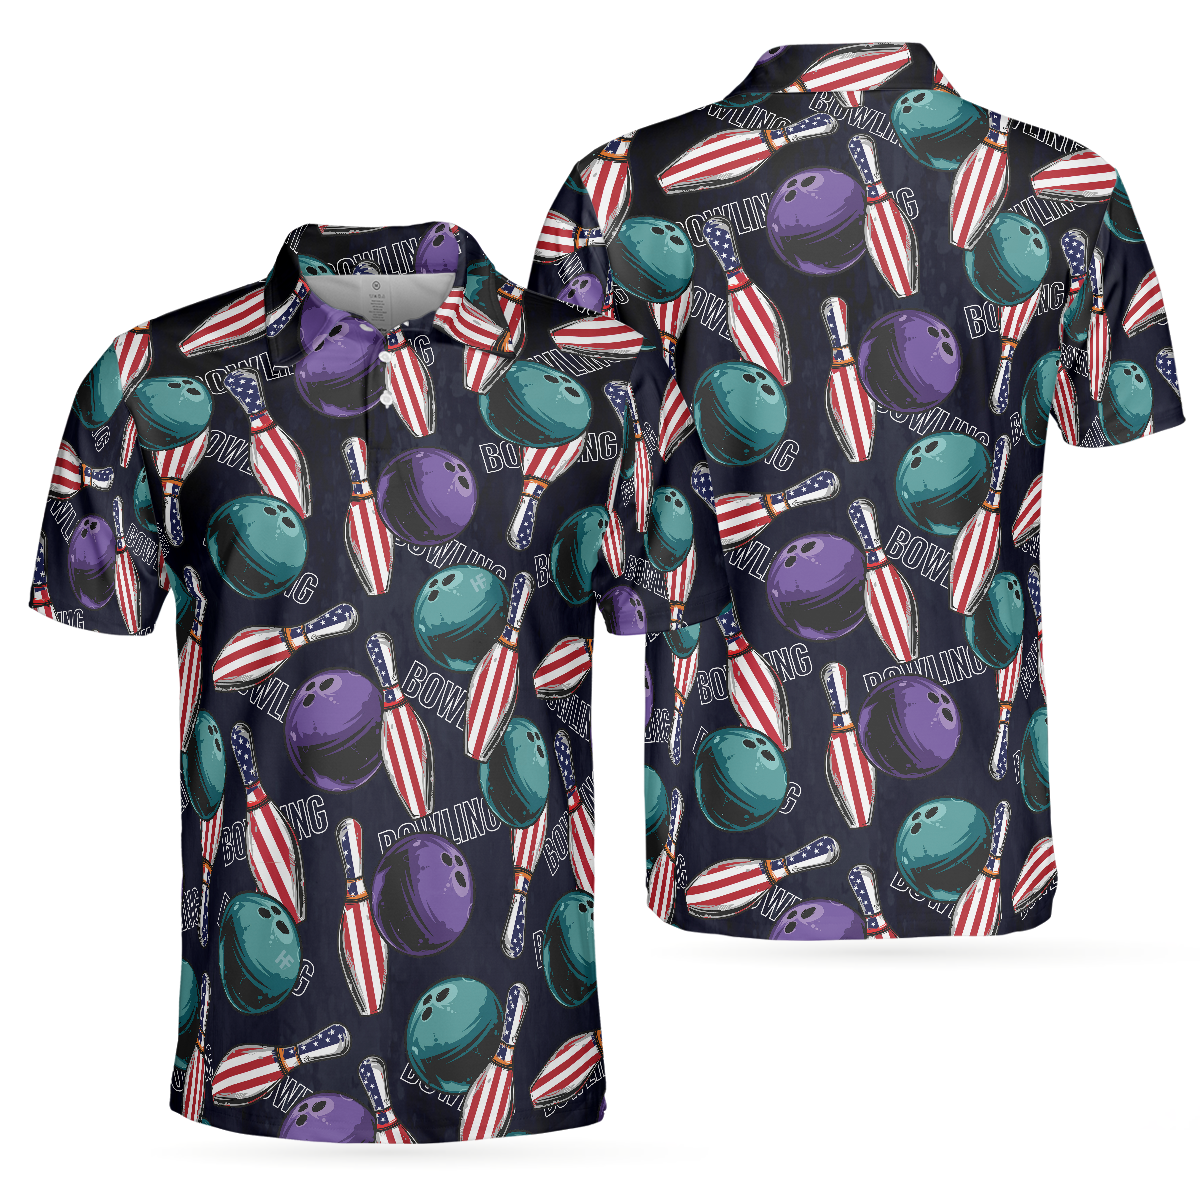 Bowling Is My Life Polo Shirt/ American Flag Pattern Bowling Shirt For Men/ Bowling Shirt Uniform Team